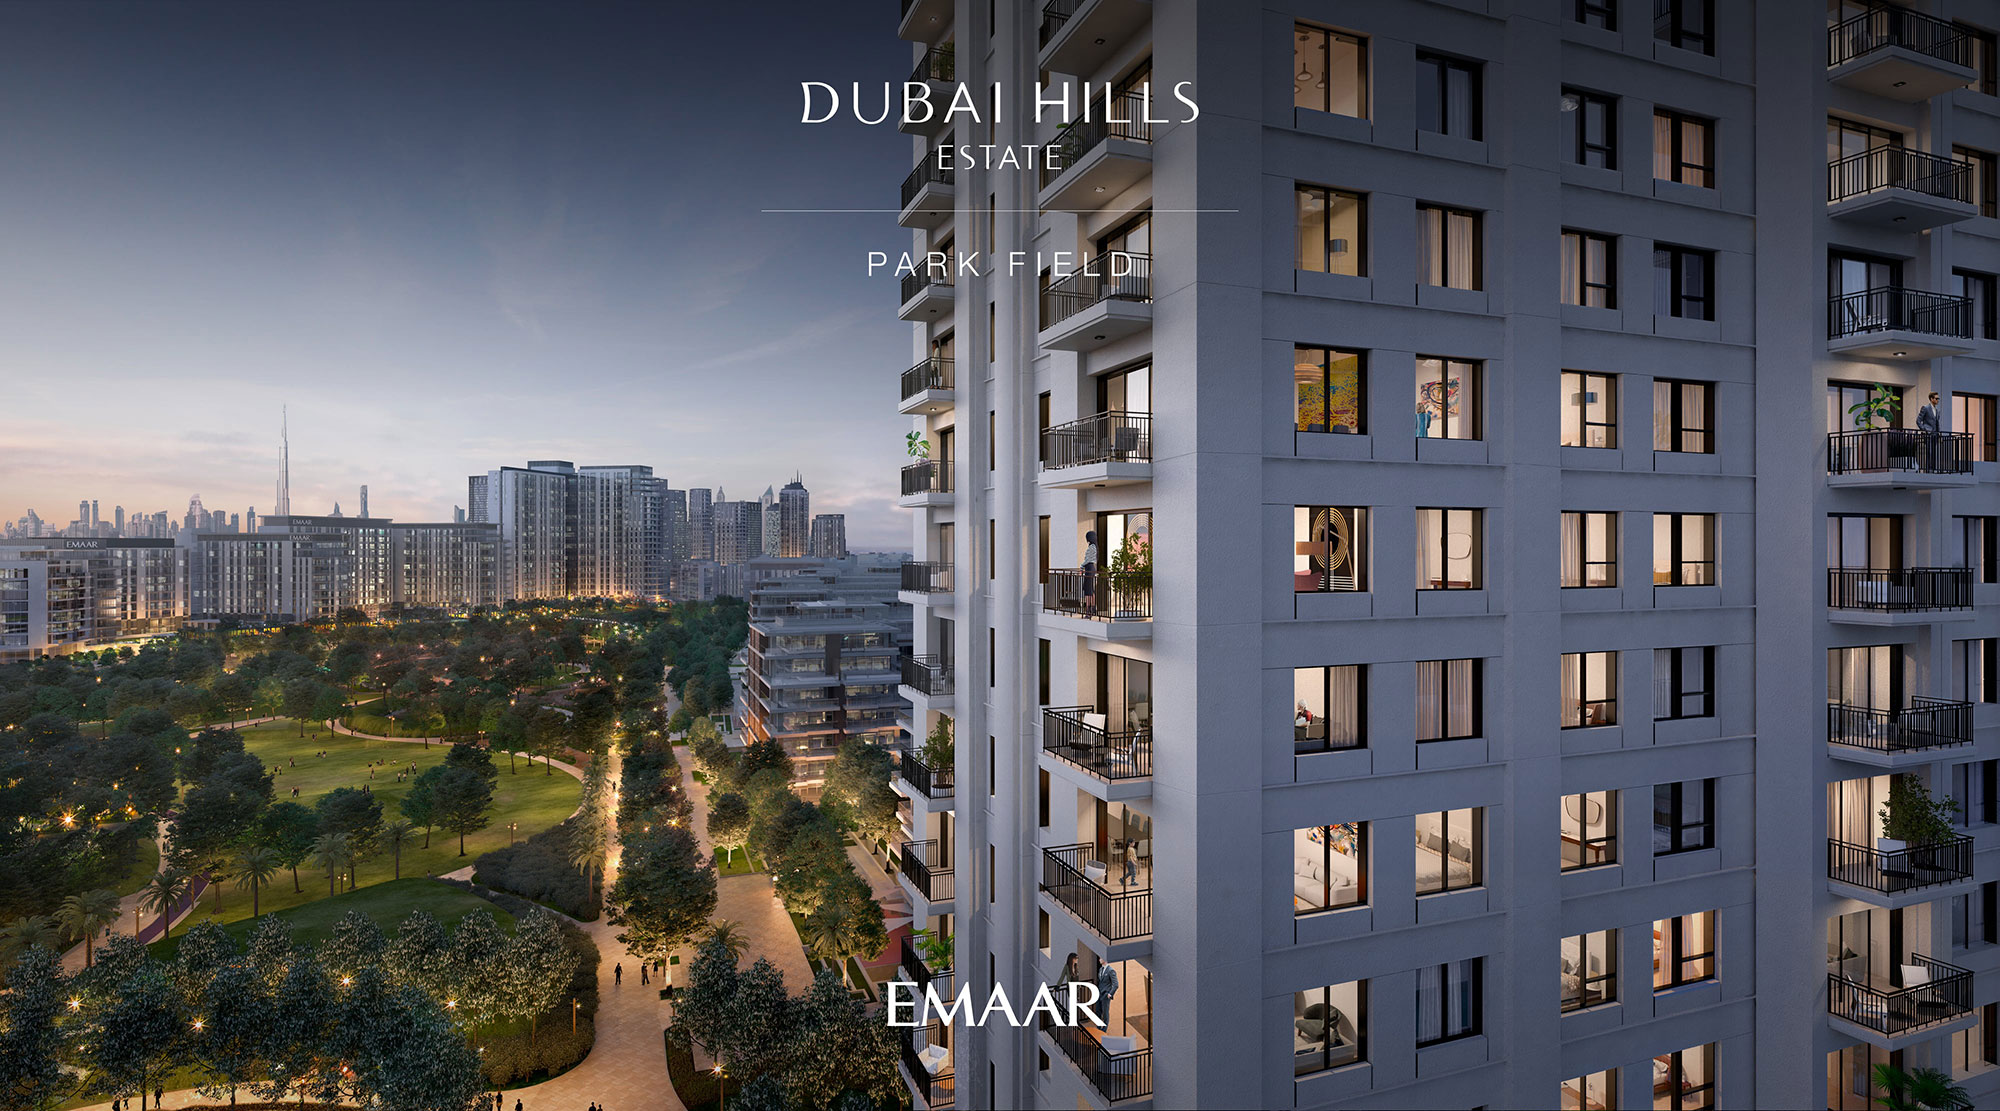 ParkField at Dubai Hills Estate by EMAAR